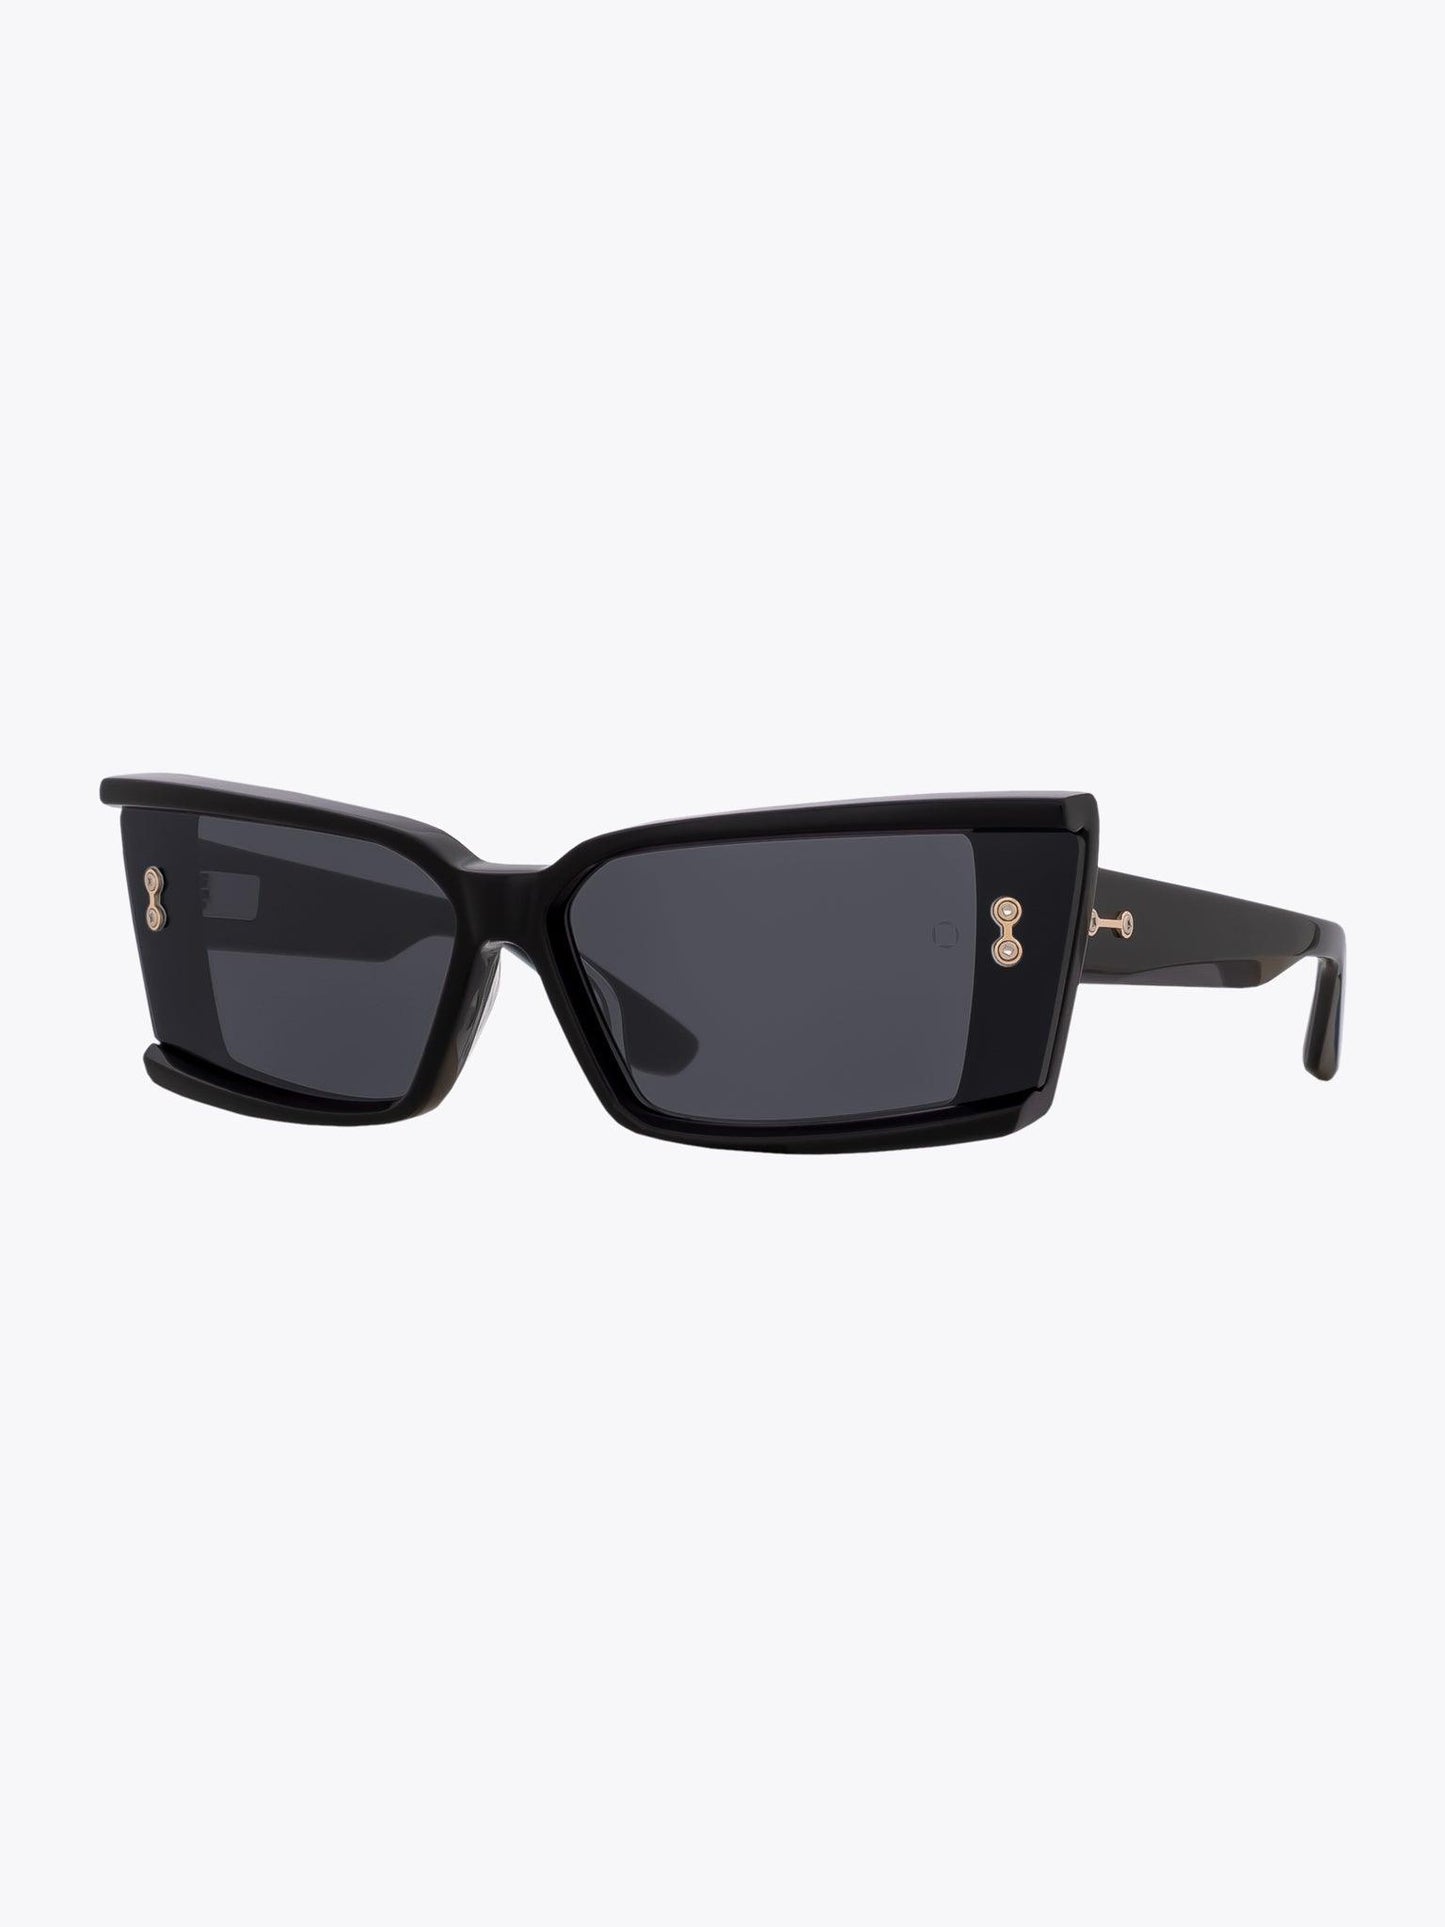 AKONI Lynx Black Sunglasses - Apodep.com